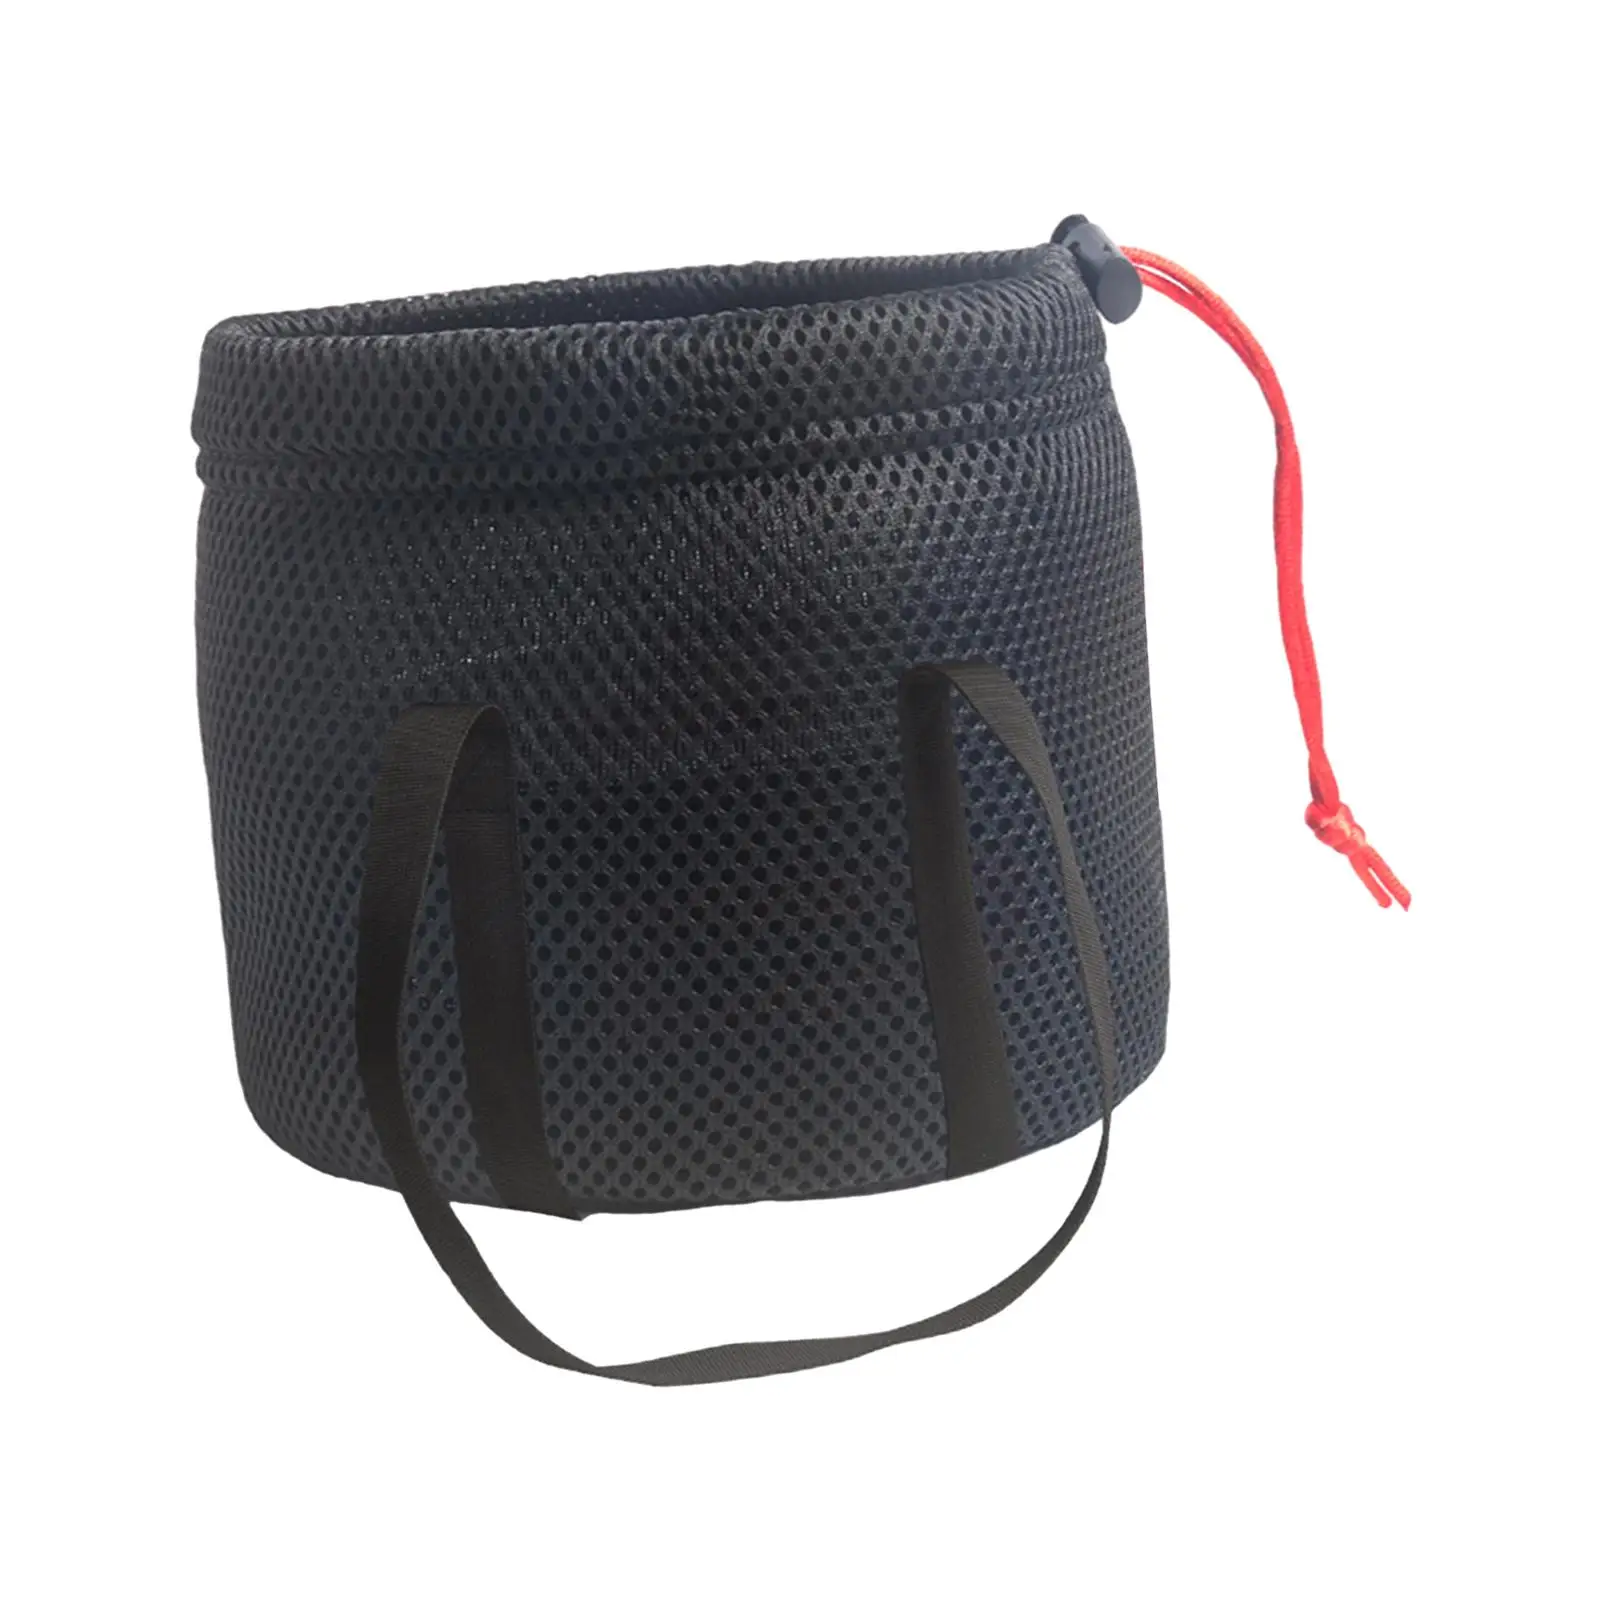 Camping Pot Storage Bag Drawstring Portable Lightweight Camping Cookware Bag for